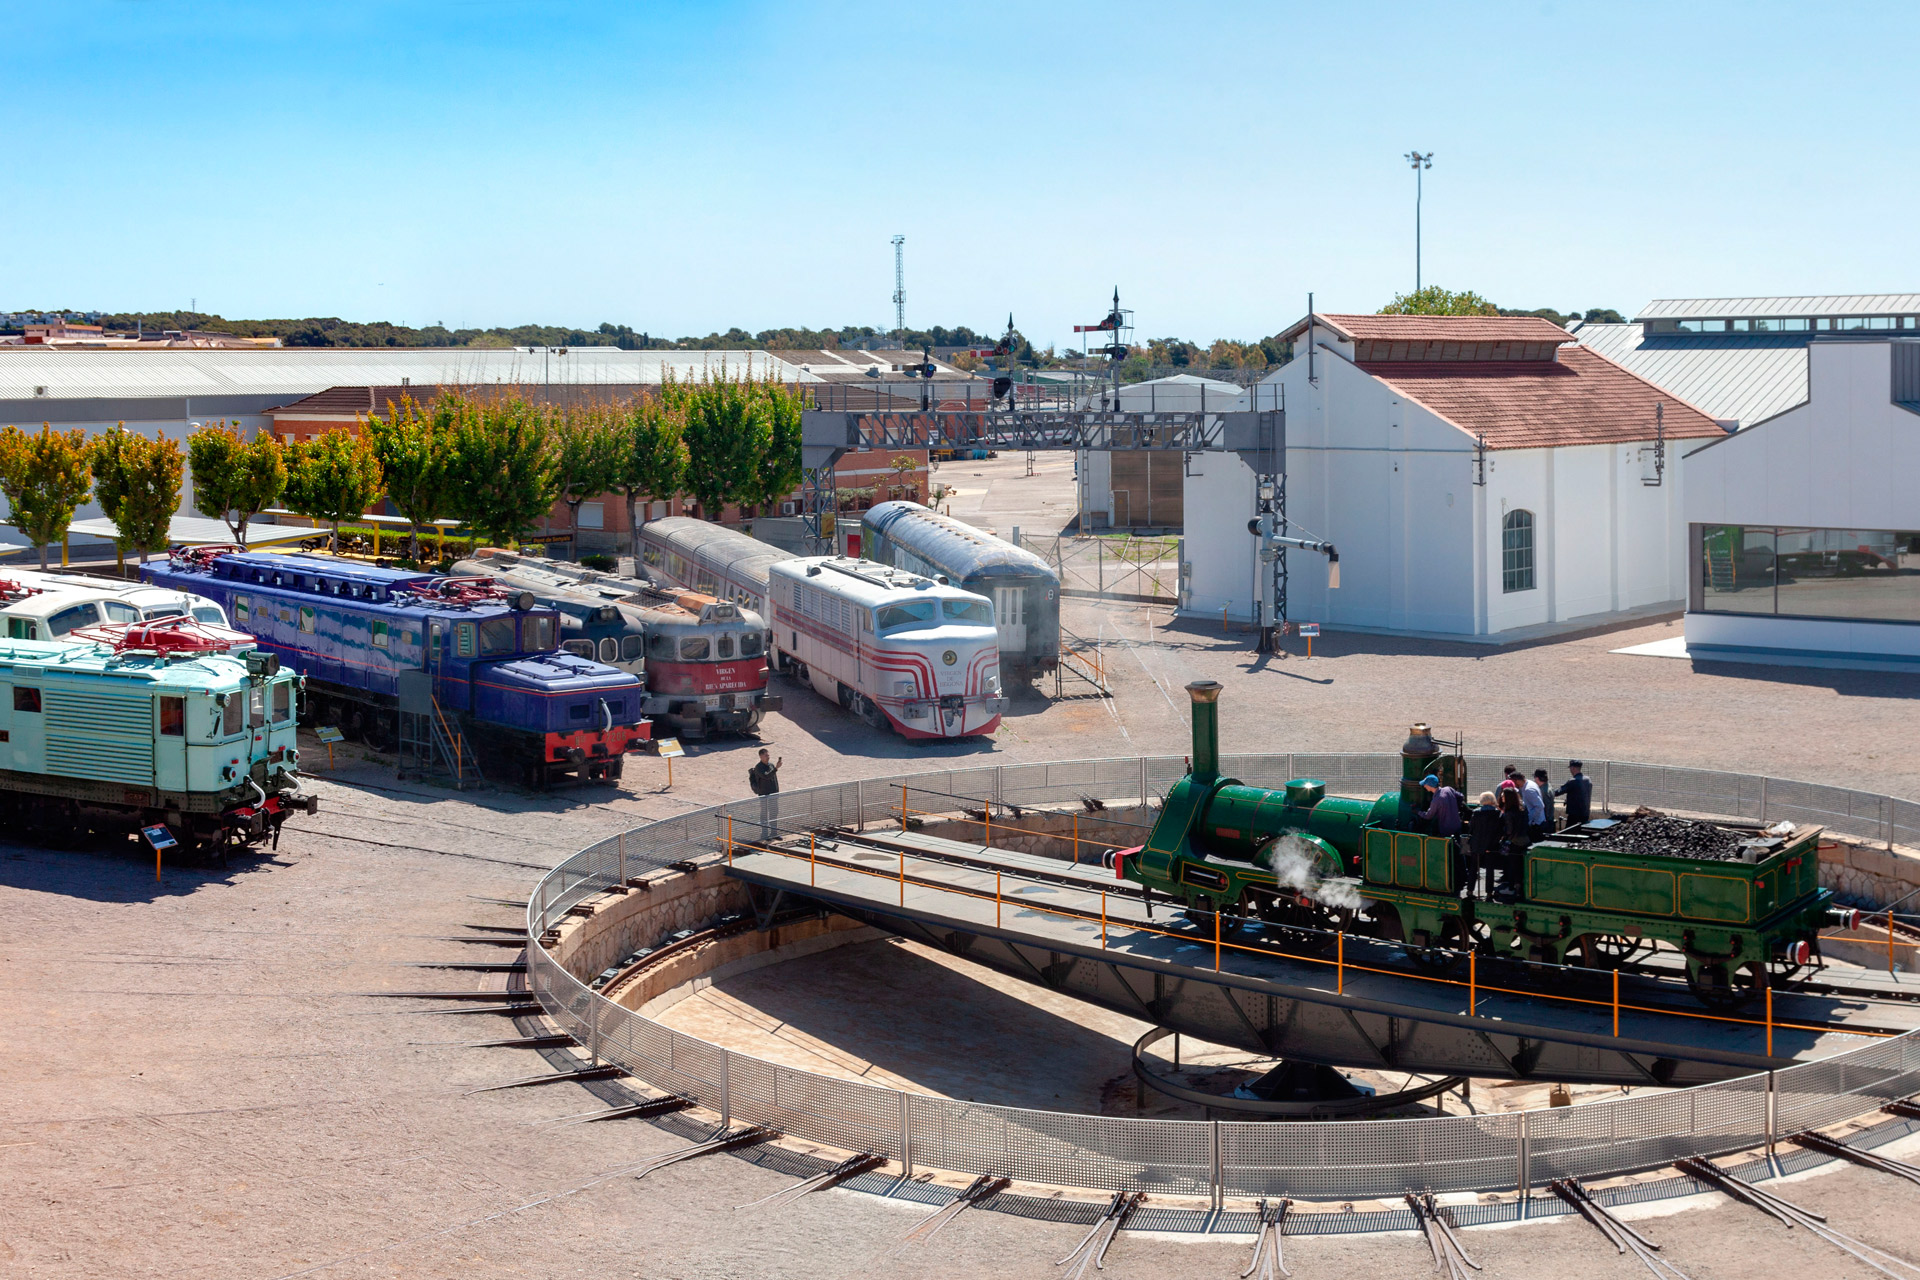 Museo Ferrocarril Vilanova